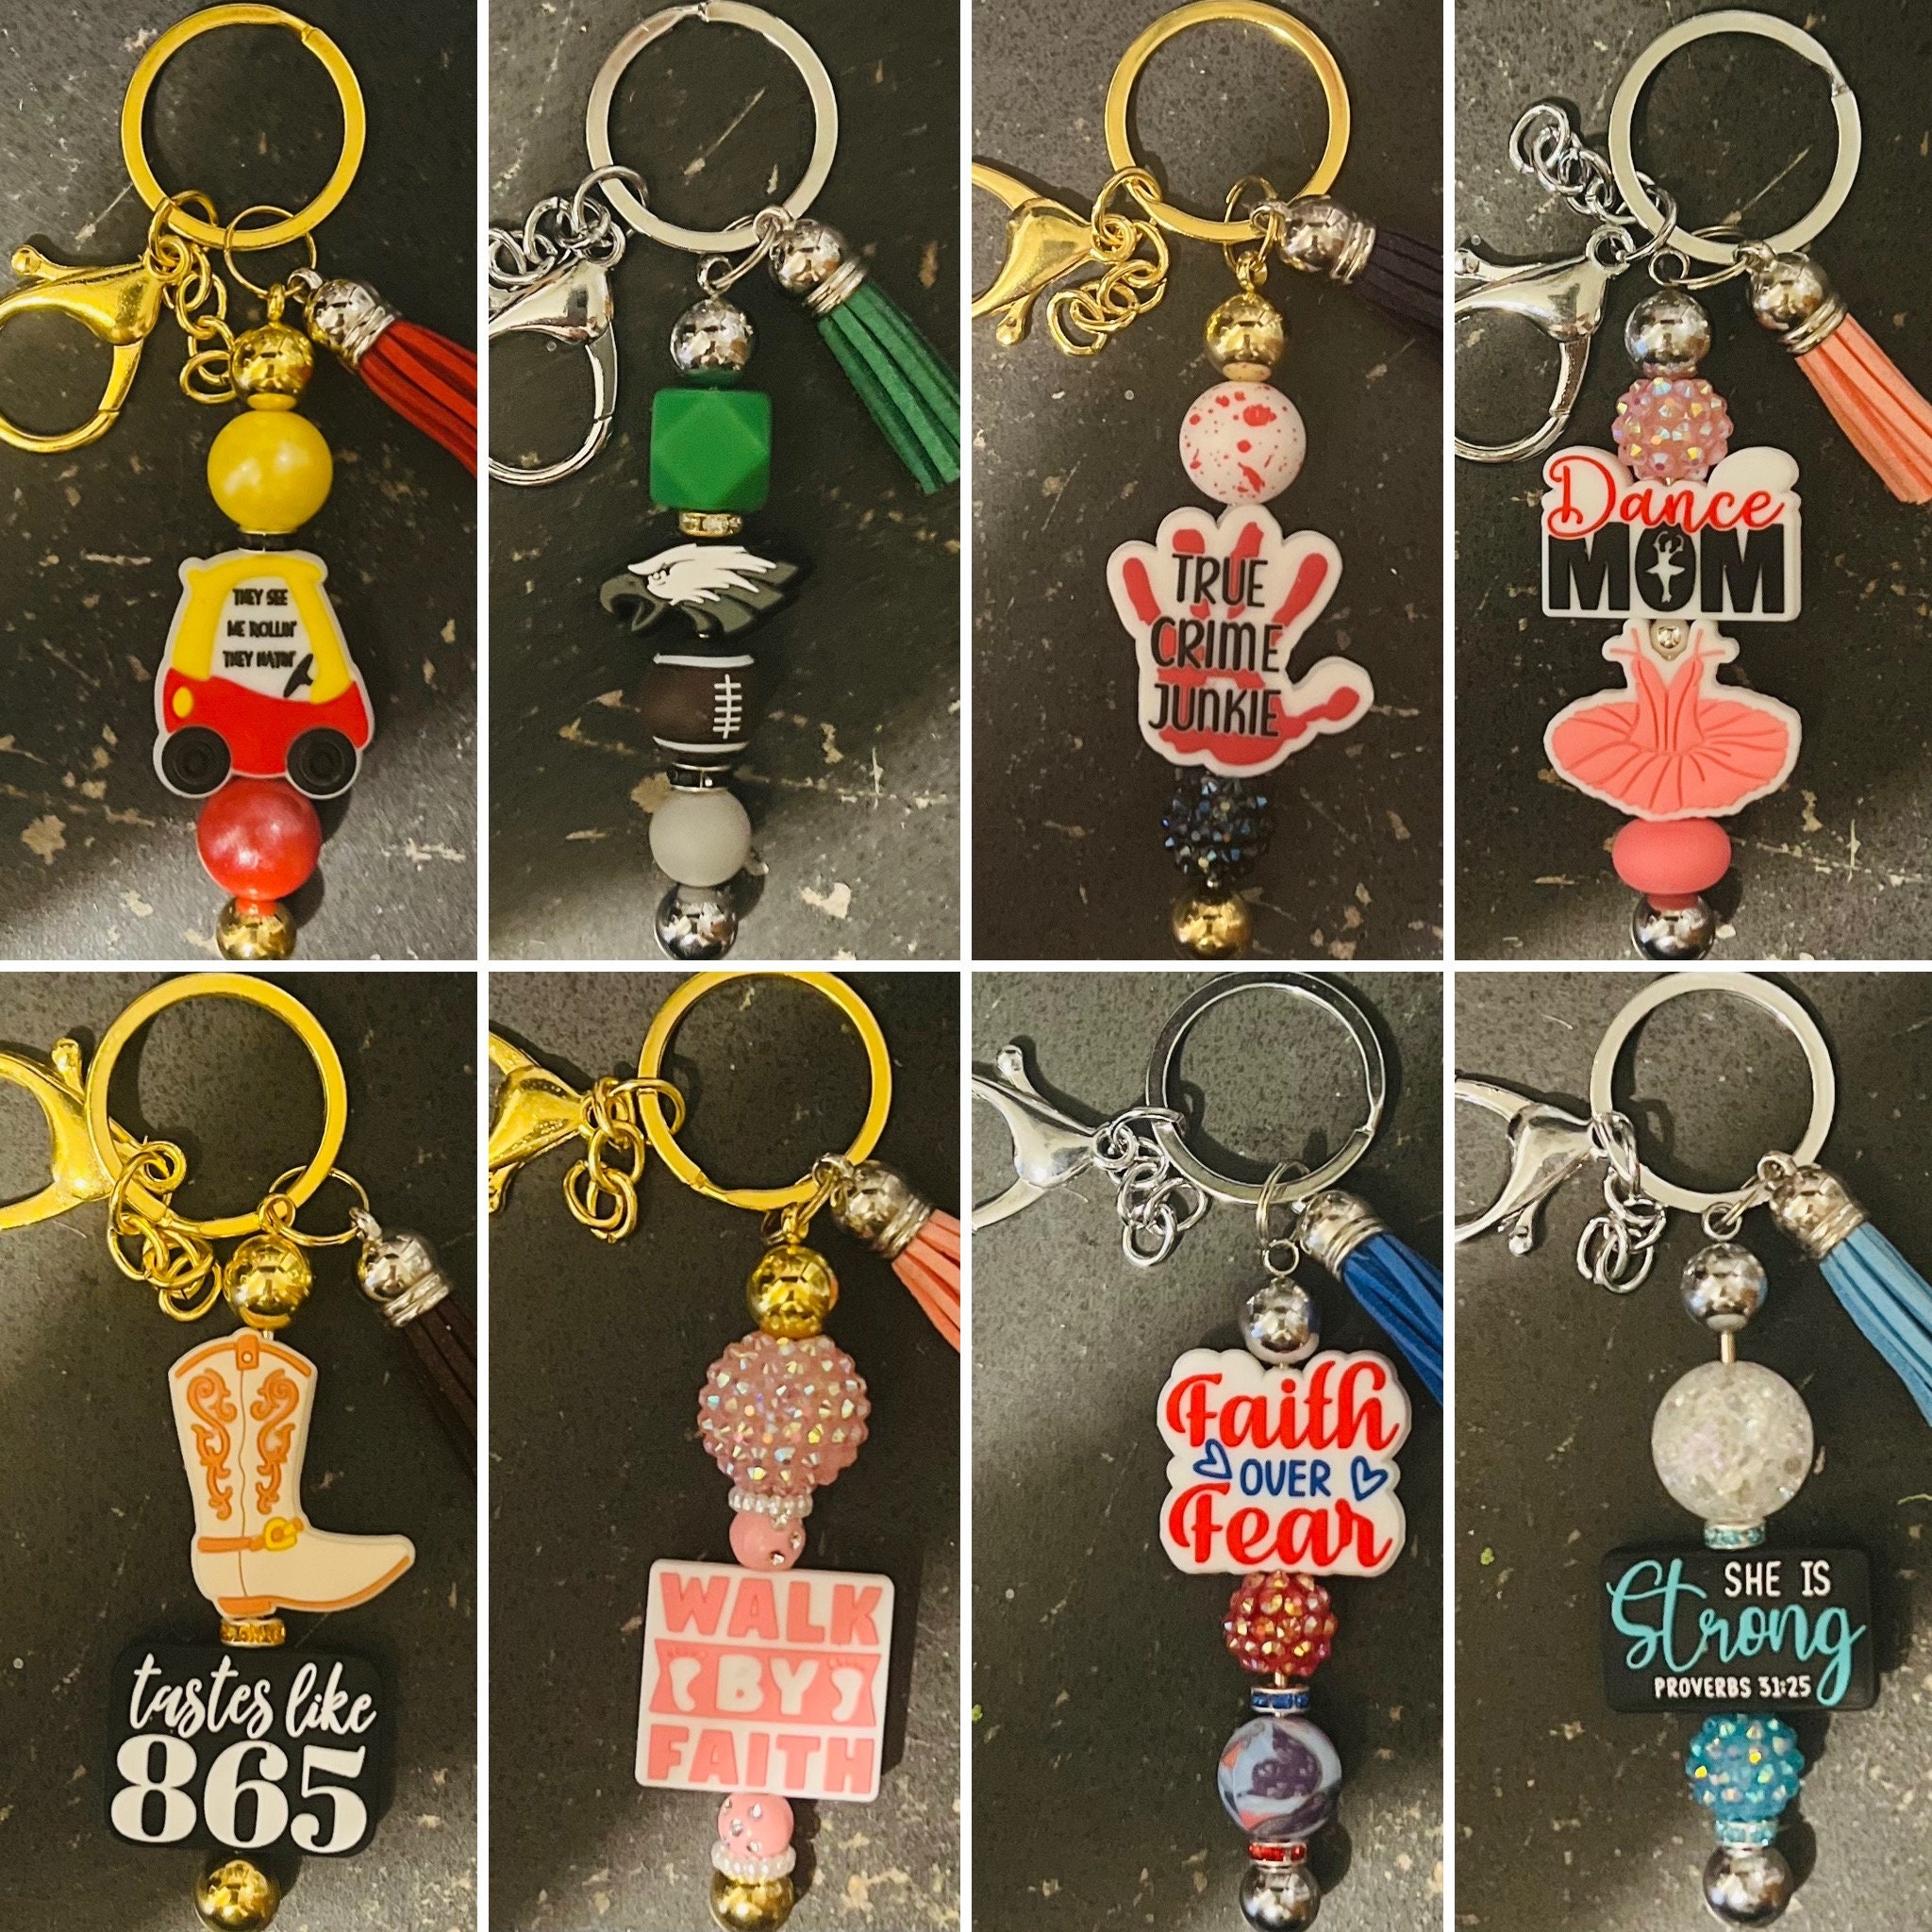 Beadable Bar Keychains,beadable Metal Keychains,keychain DIY